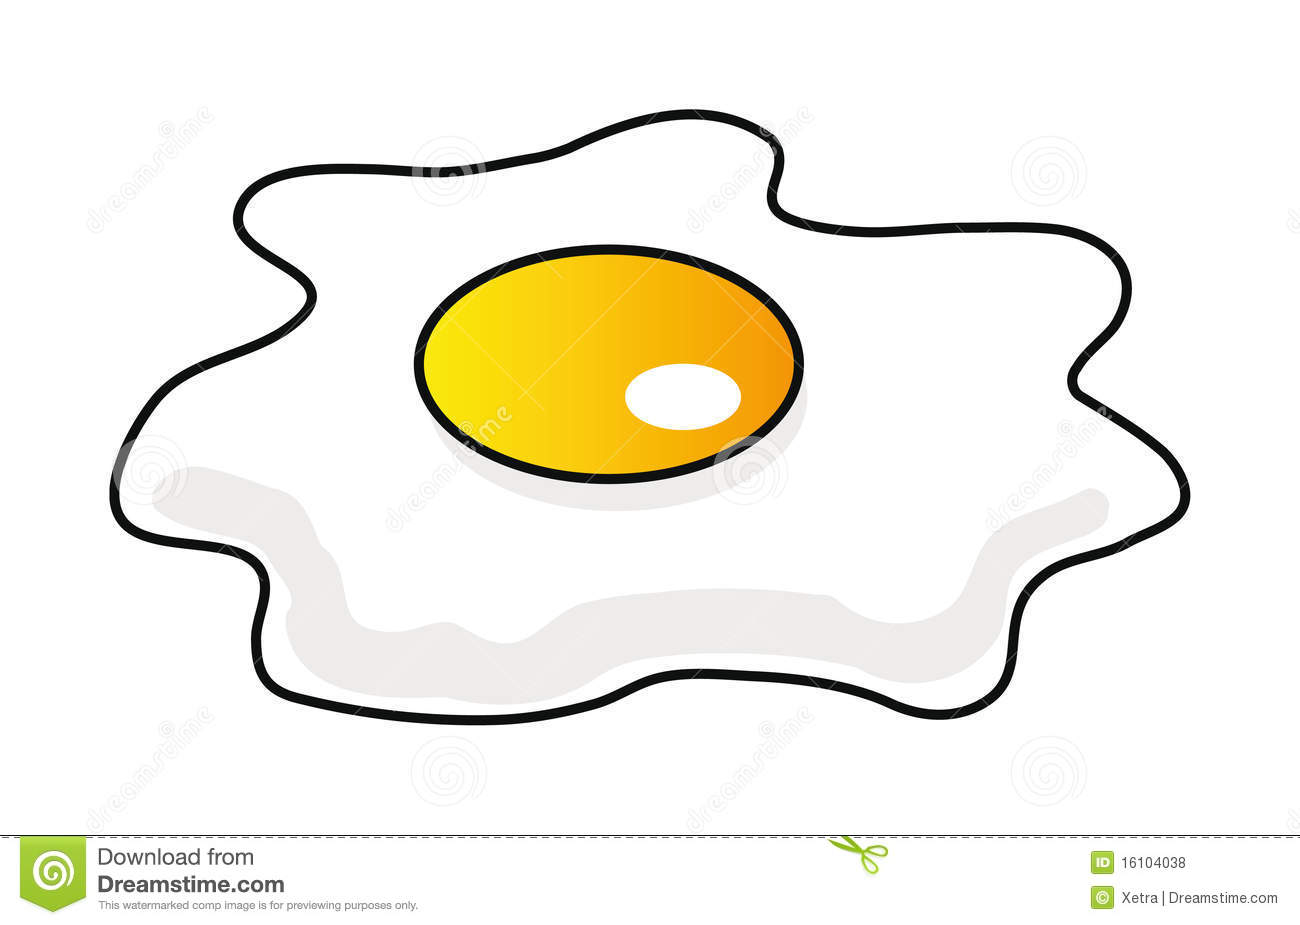 Cartoon Fried Egg Royalty Free Stock Photos   Image  16104038